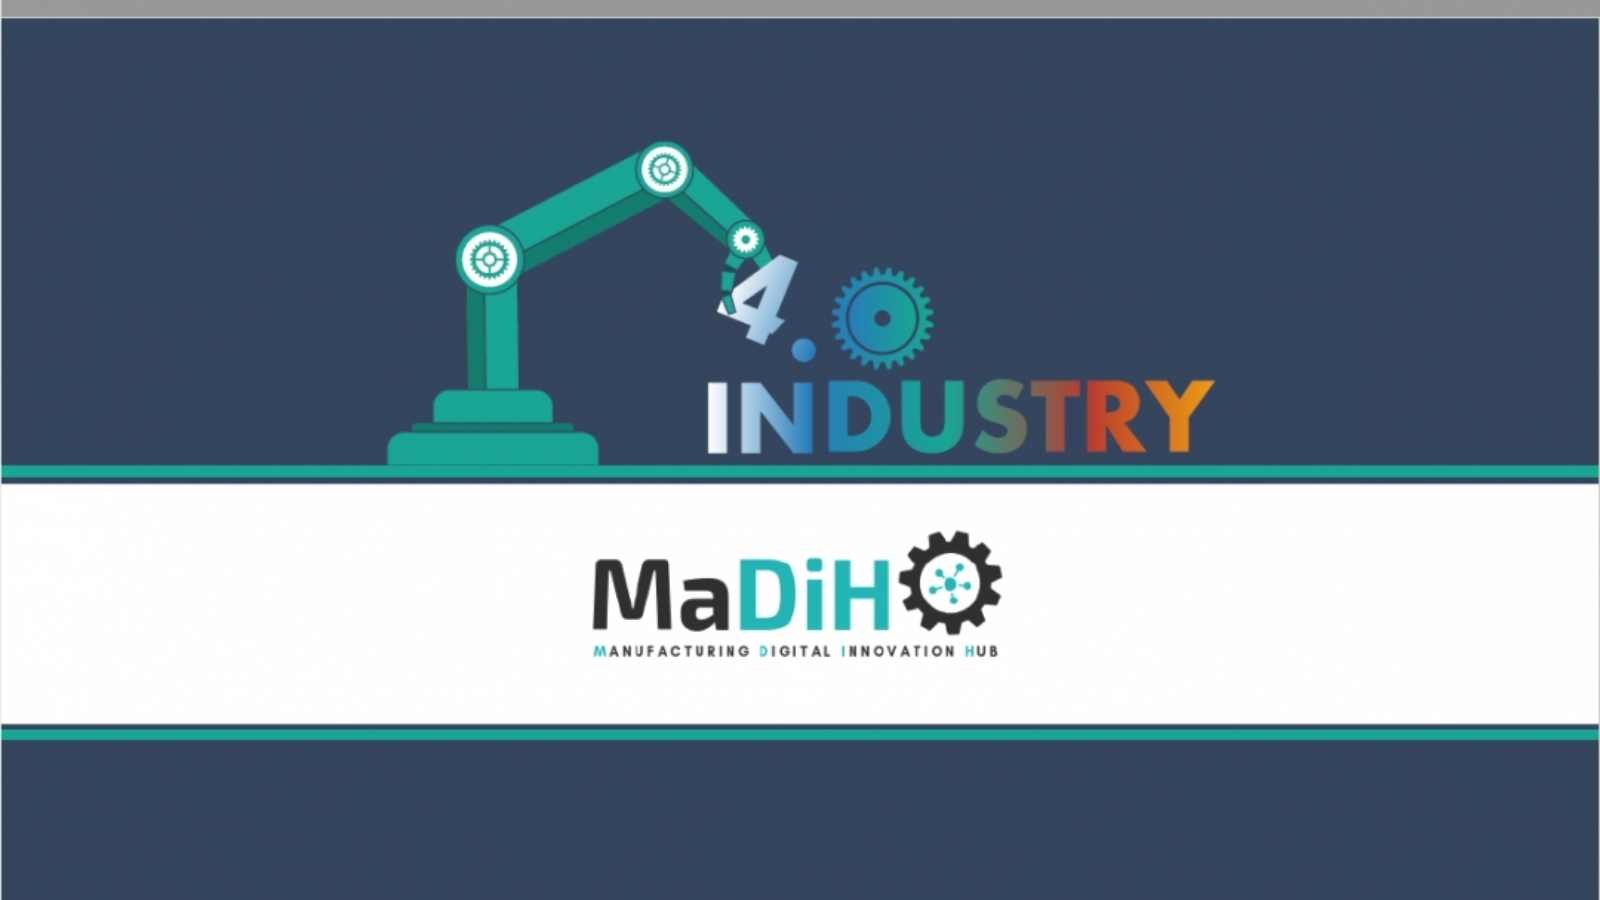 madih industry 4.0